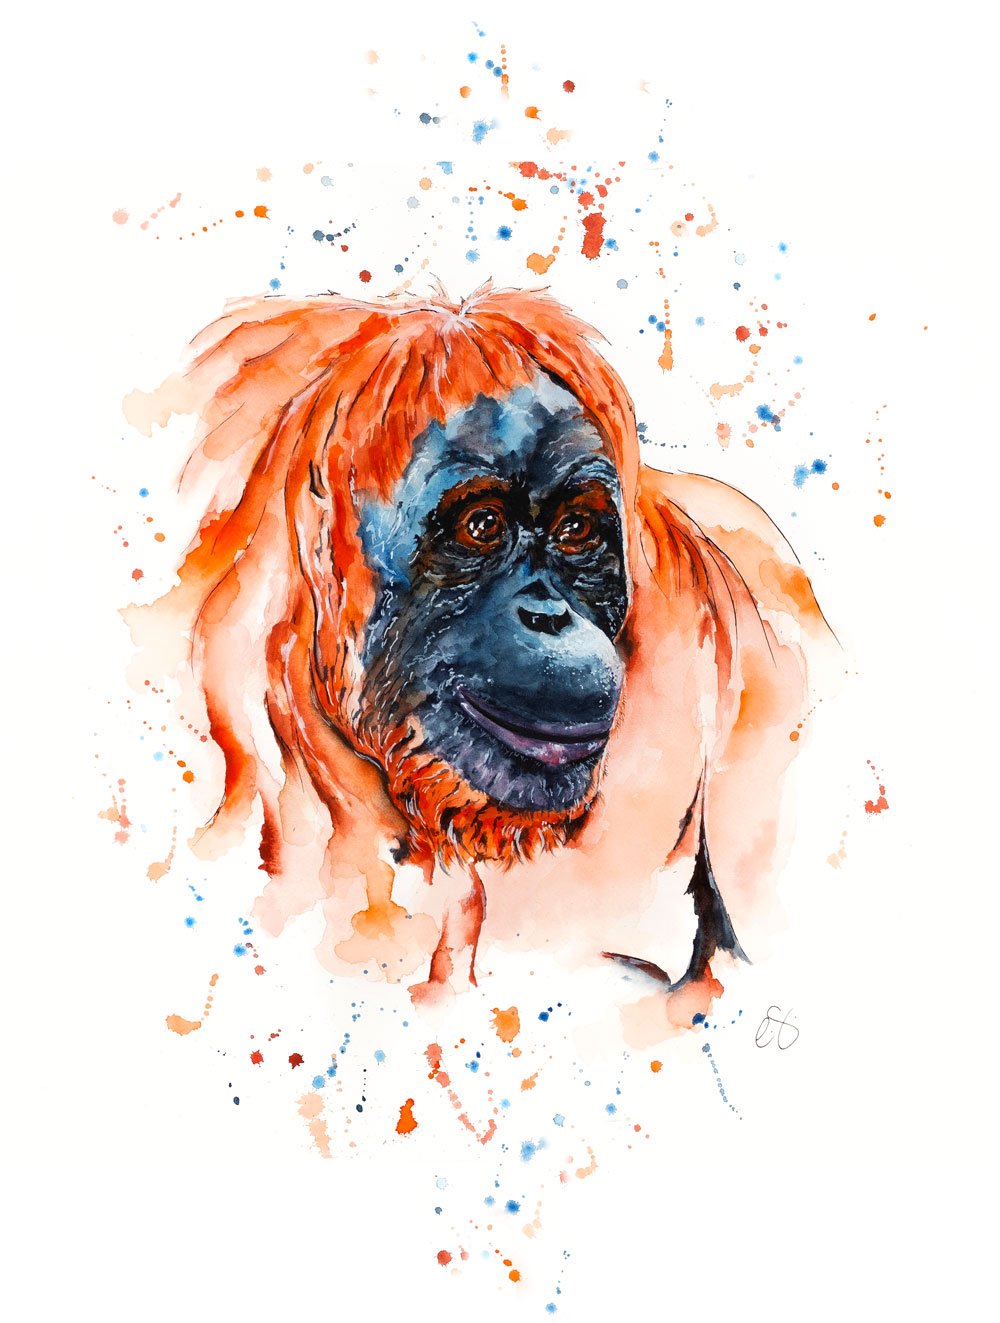 Image of Orangutan - WWF Wildlife Collection